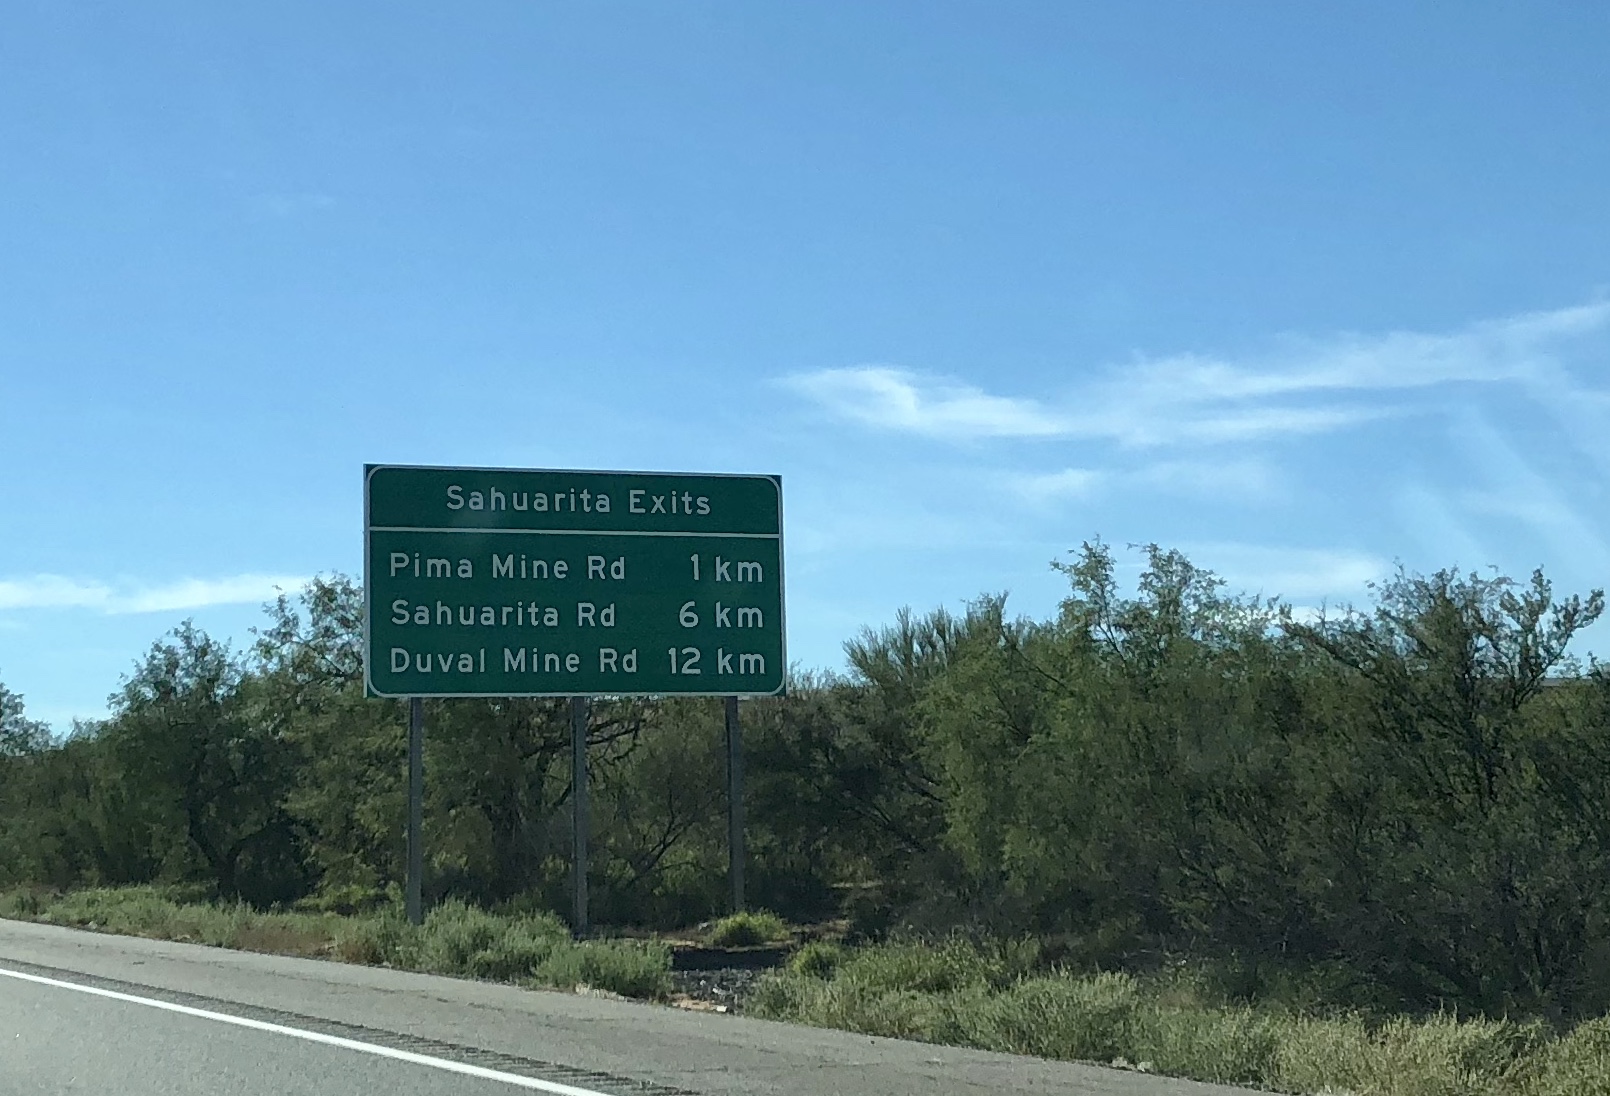 Interstate sign in km